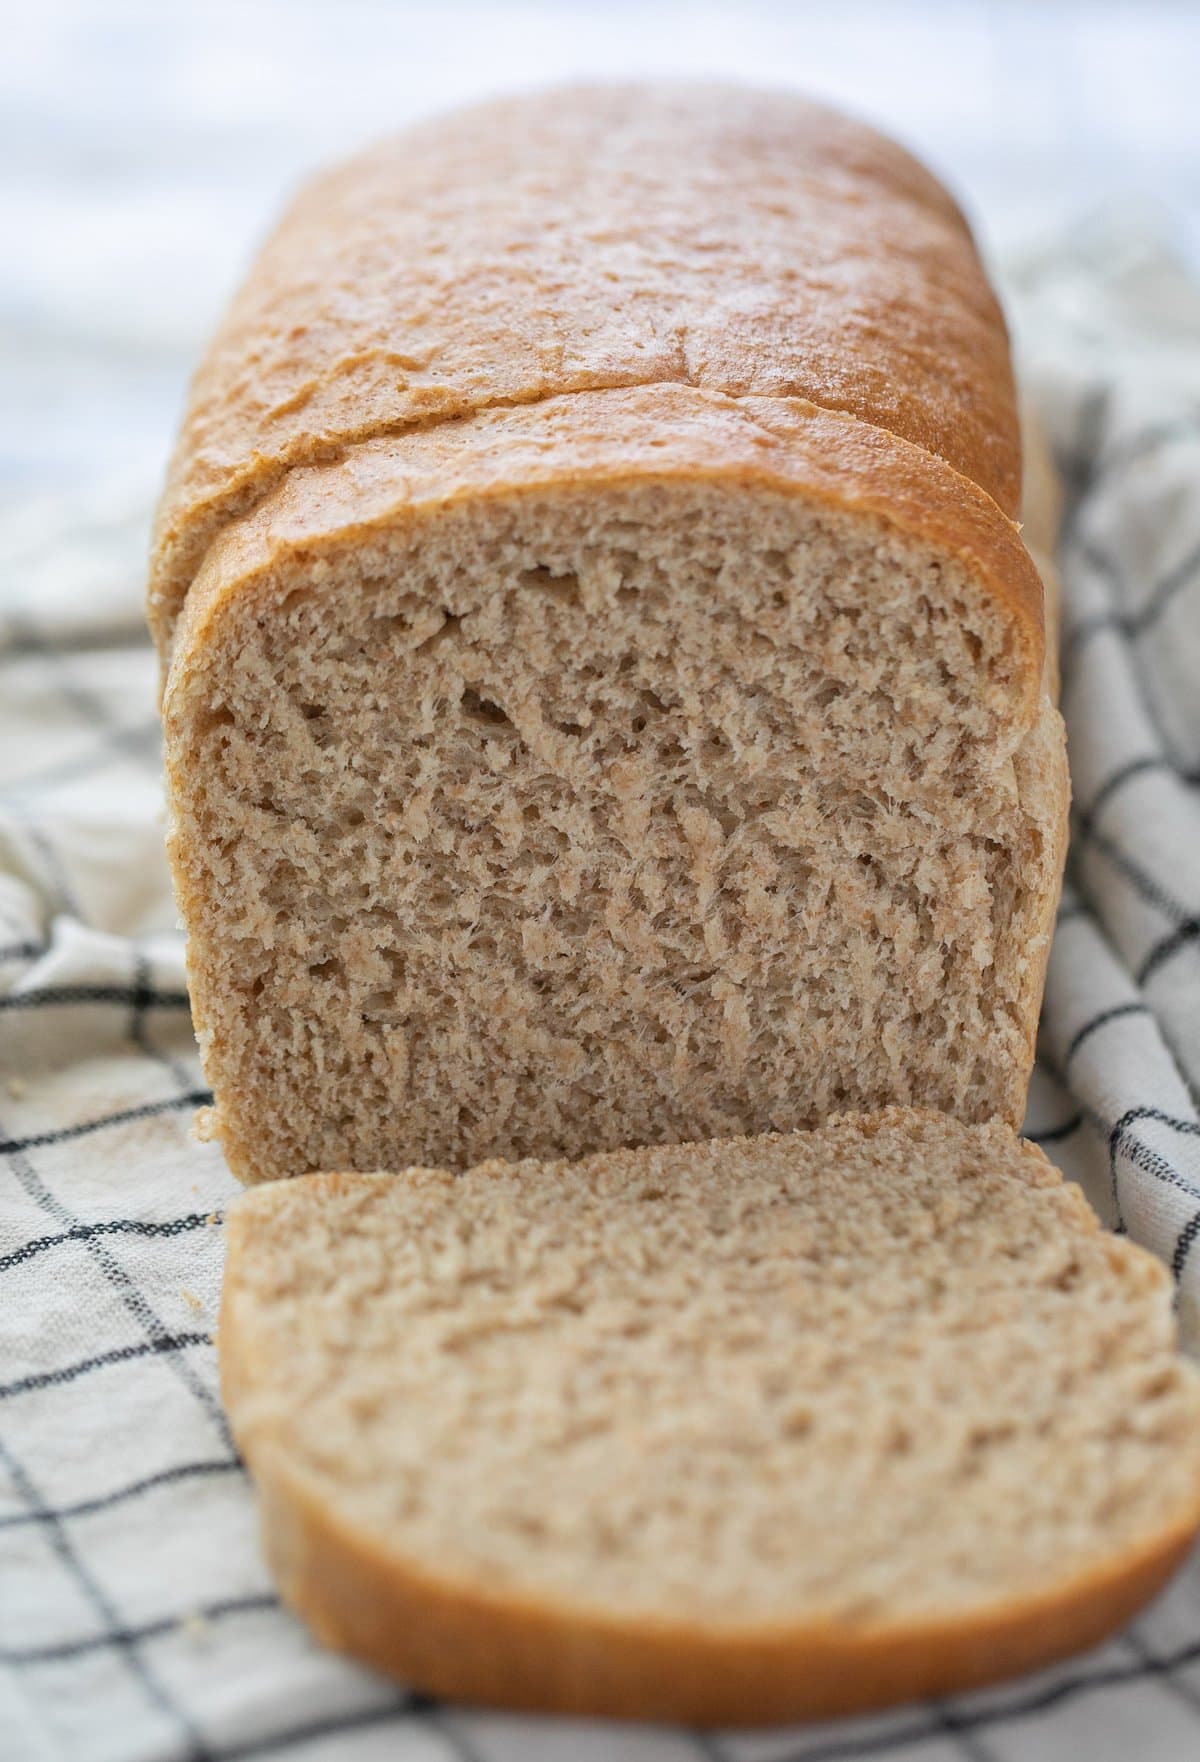 Whole Wheat Bread Loaf